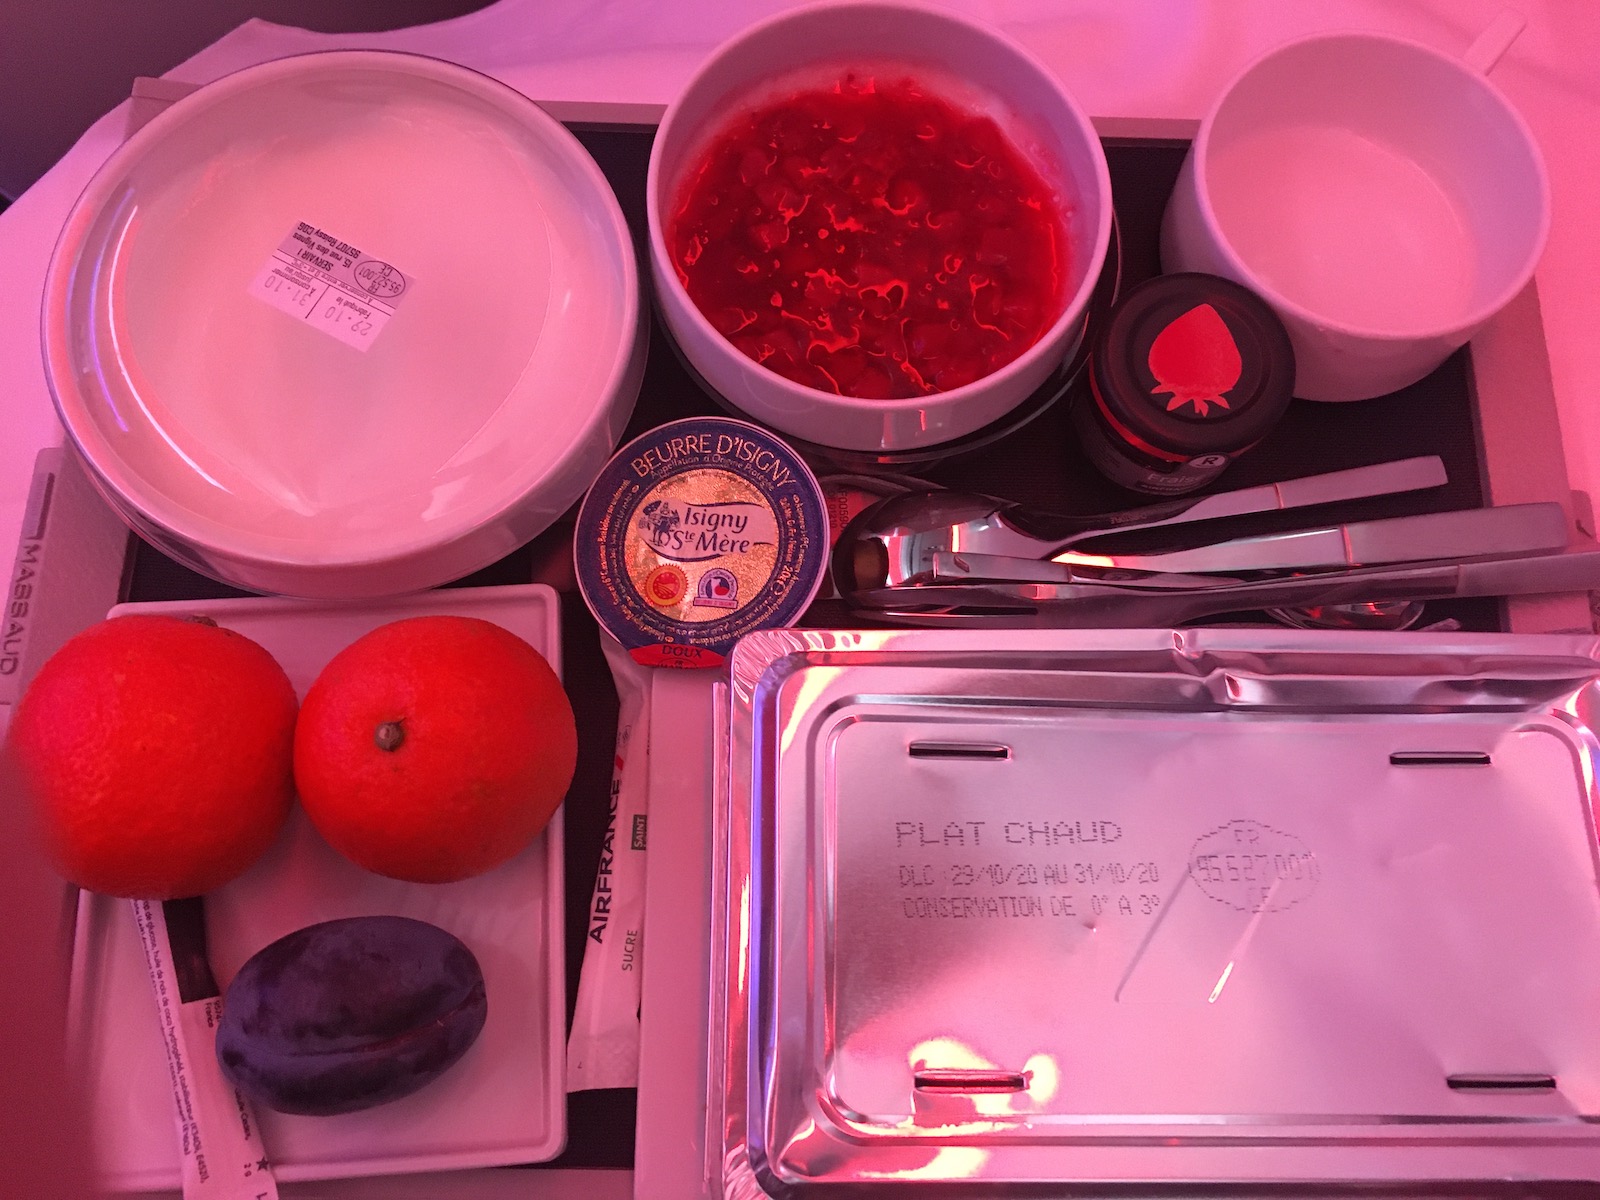 Air France non-vegan breakfast